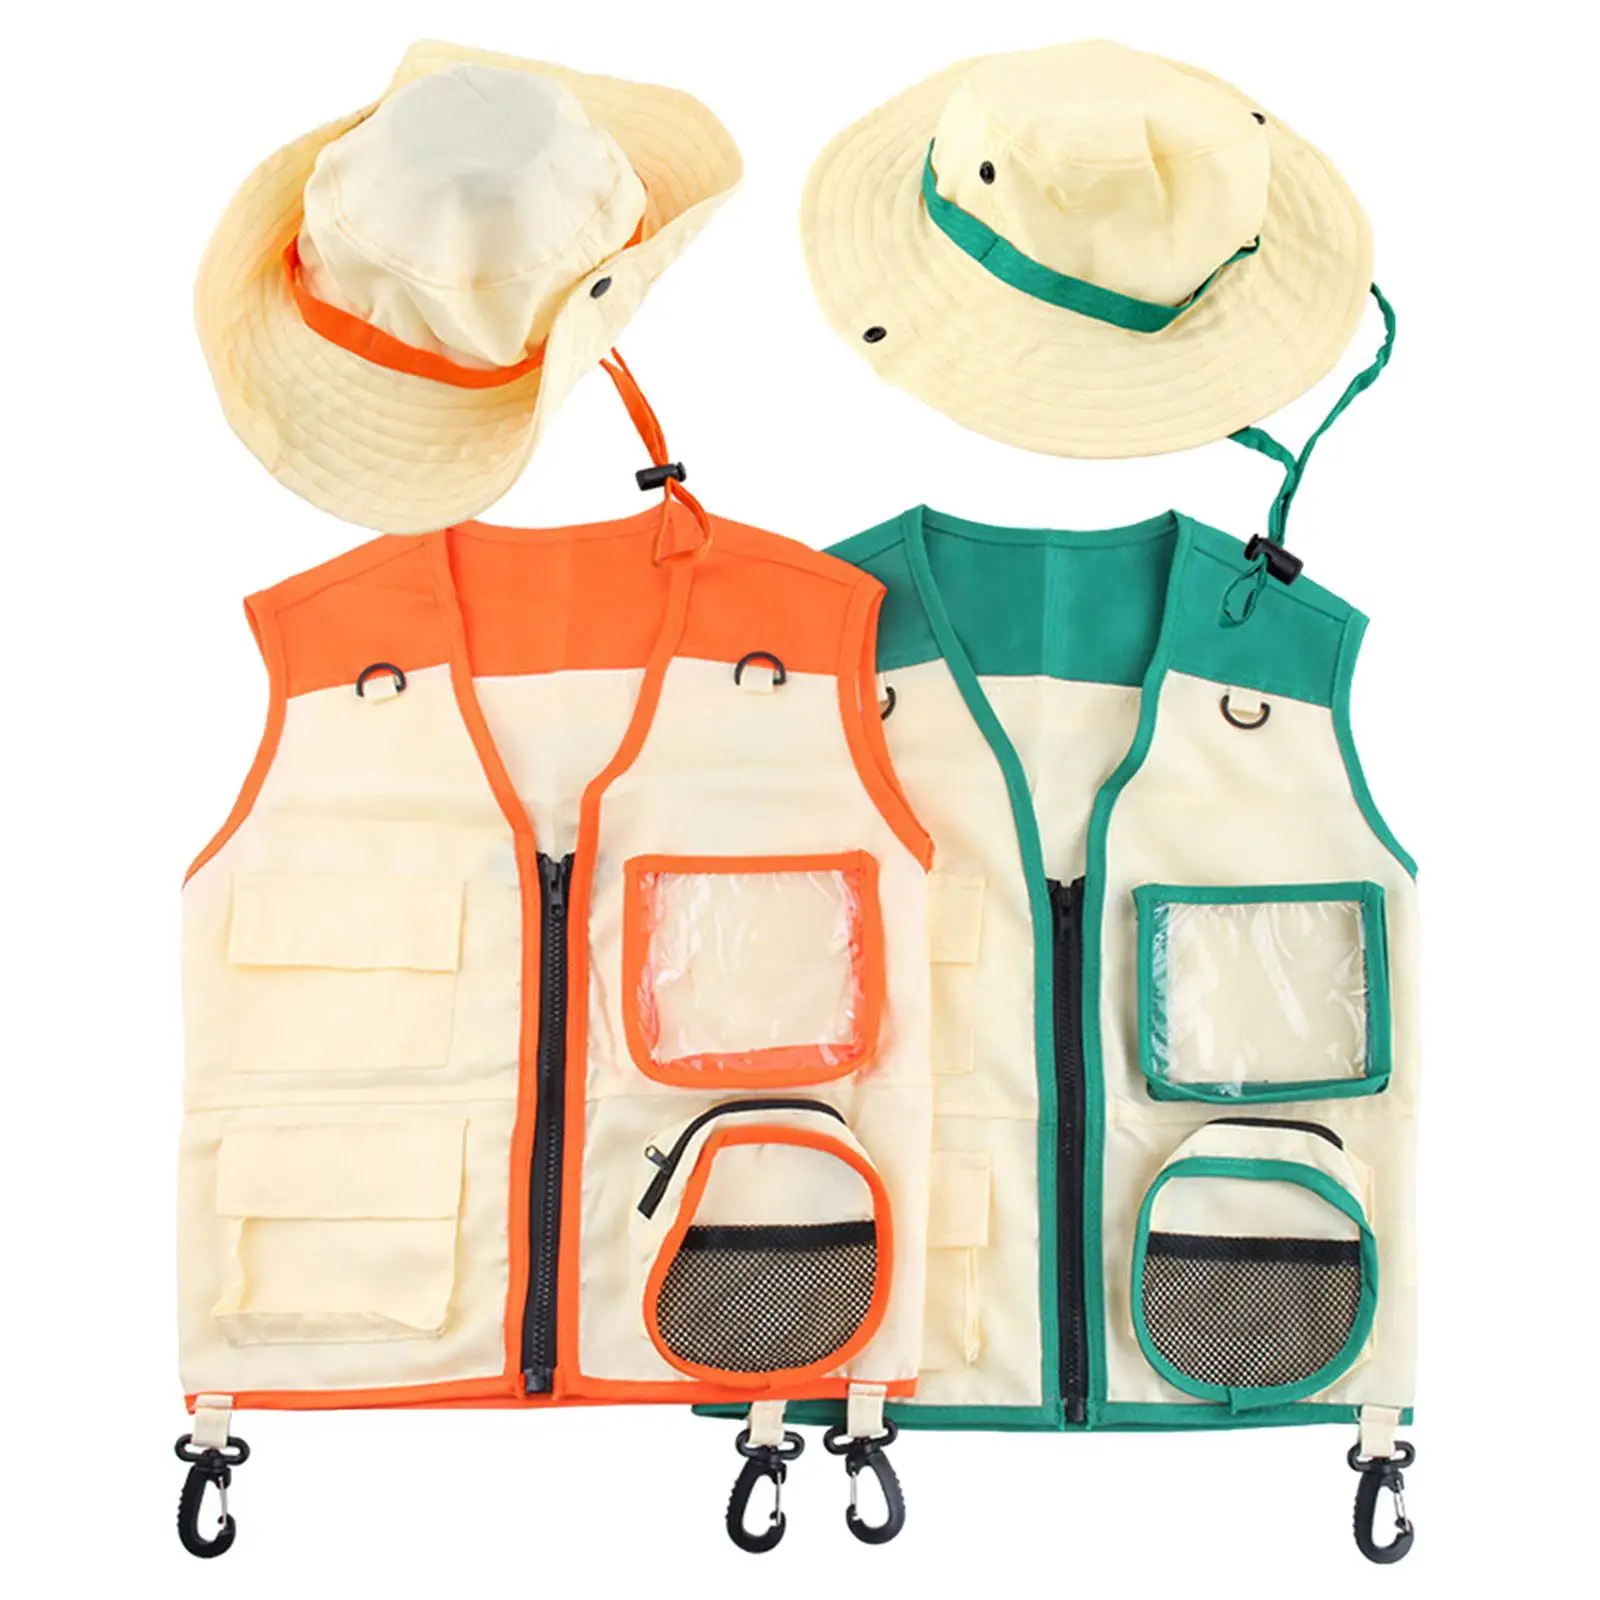 Kids Outdoor Explorer Kit Role Play Costumes Cosplay Costumes Outdoor Adventure Kit, Vest and Hat Set for Girls Boys Children